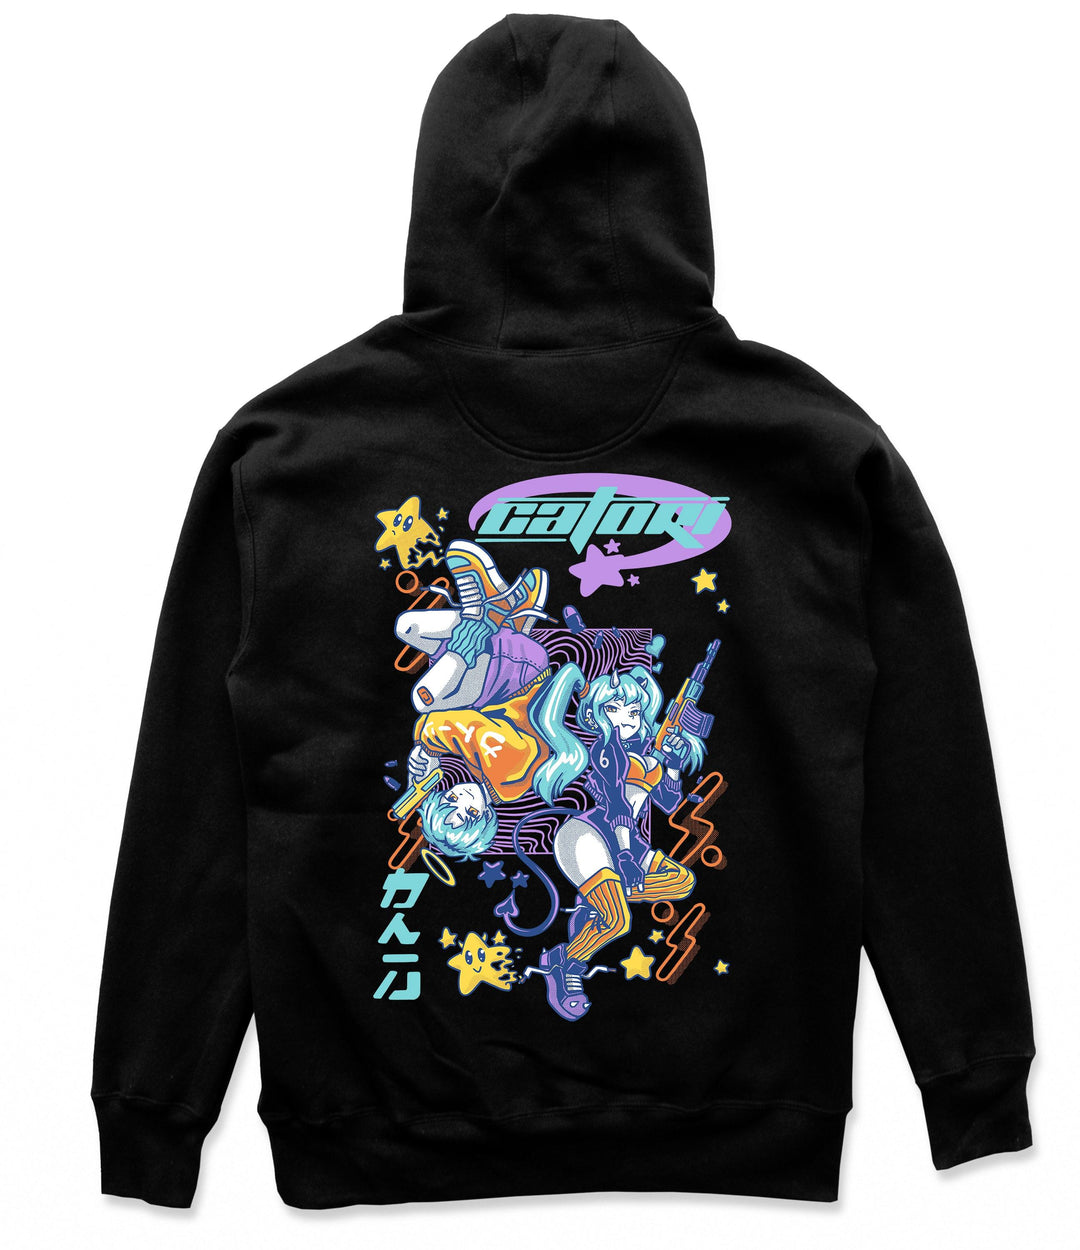 2Gunners Hoodie at Catori Clothing | Graphic & Anime Tees, Hoodies & Sweatshirts 